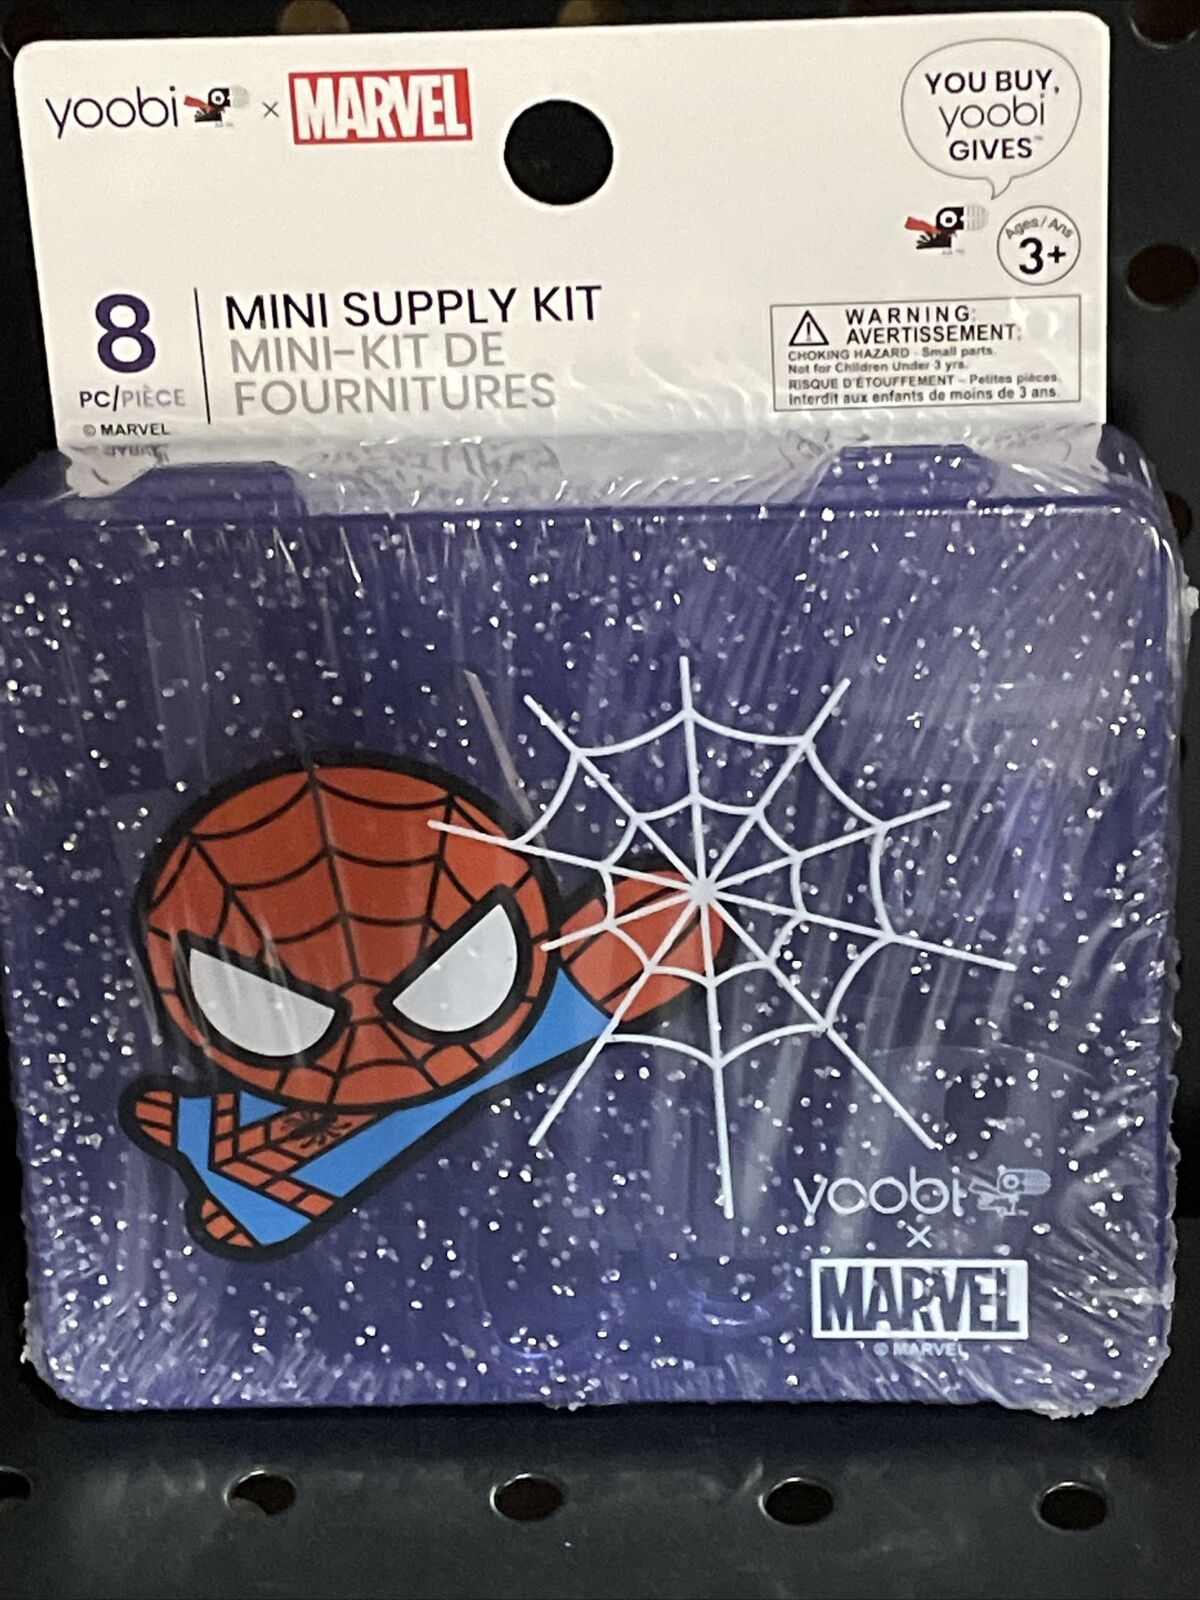 Marvel YOOBI Spiderman Mini Office Supply Kit NIB Accessories 8